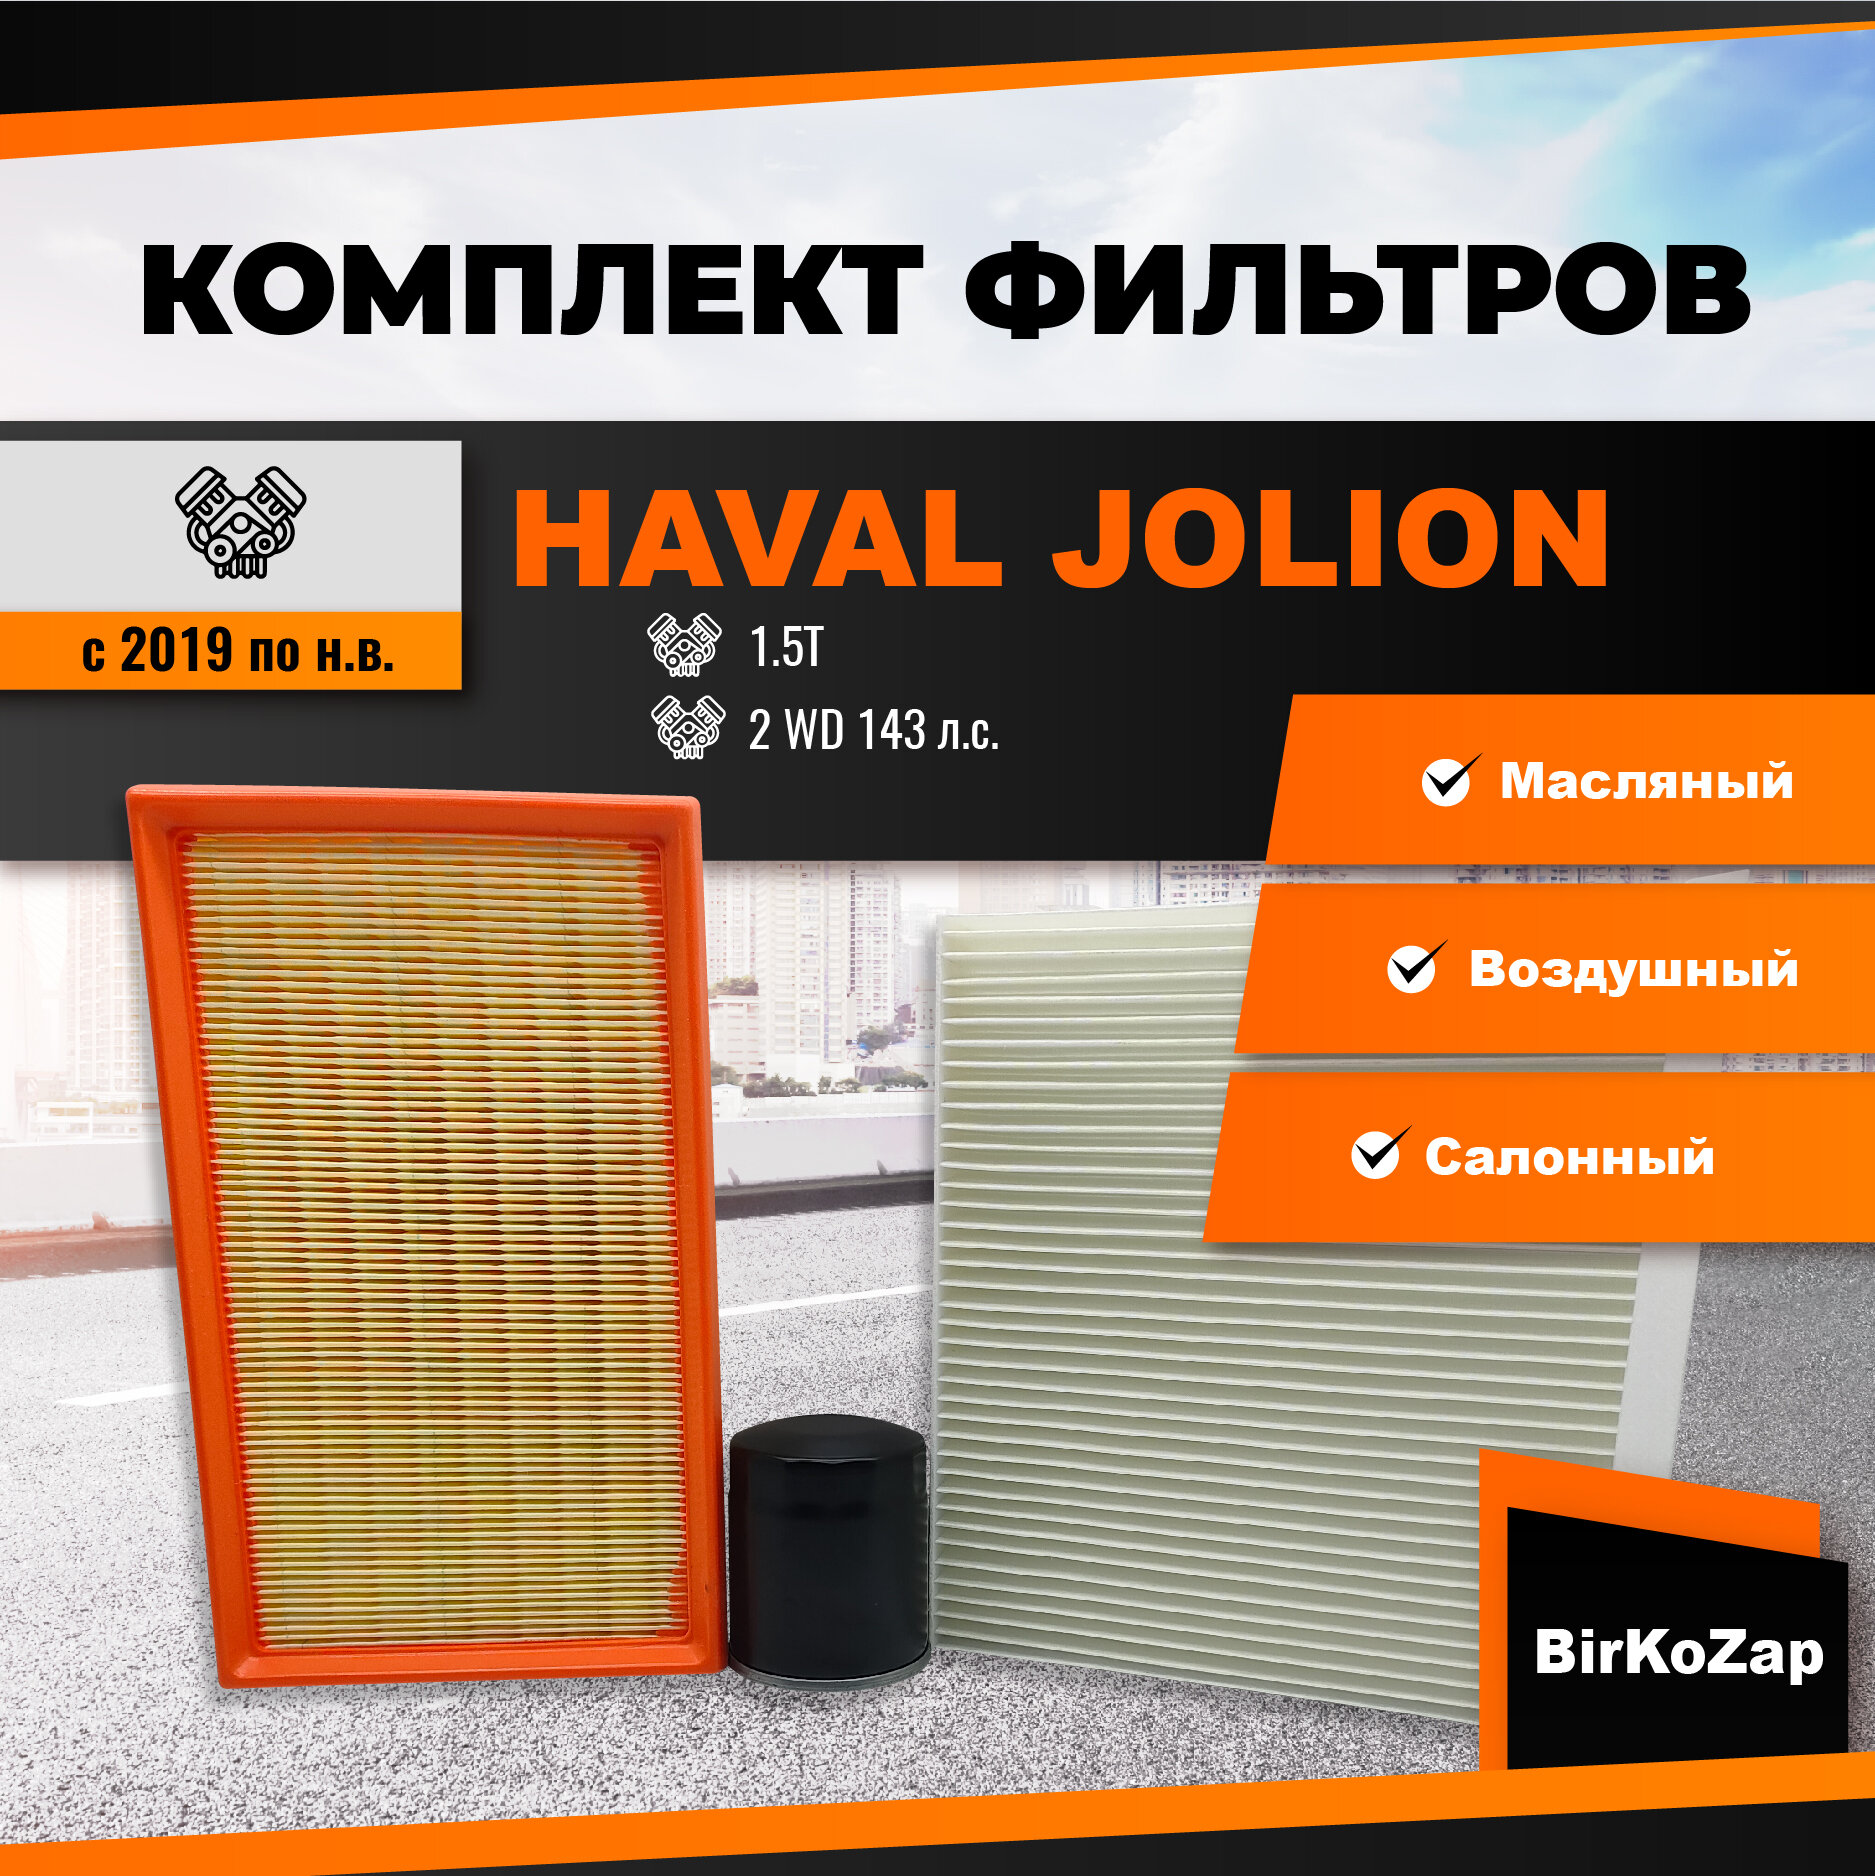 Набор фильтров HAVAL JOLION 1.5T 2WD 143 л. с.